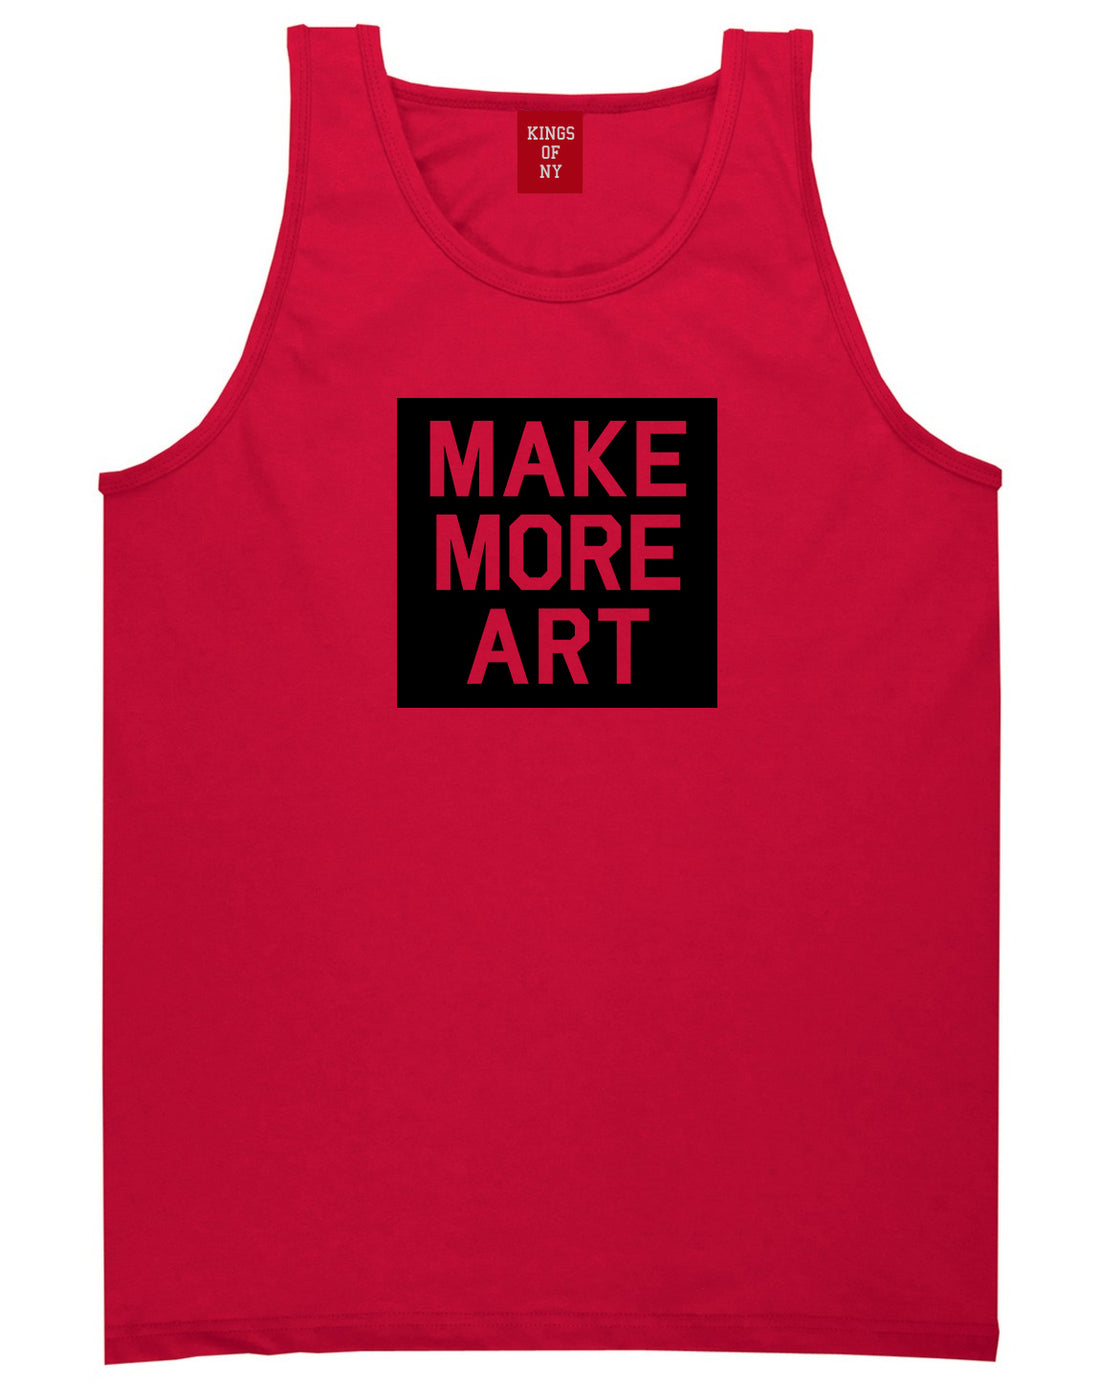 Make More Art Mens Tank Top Shirt Red by Kings Of NY